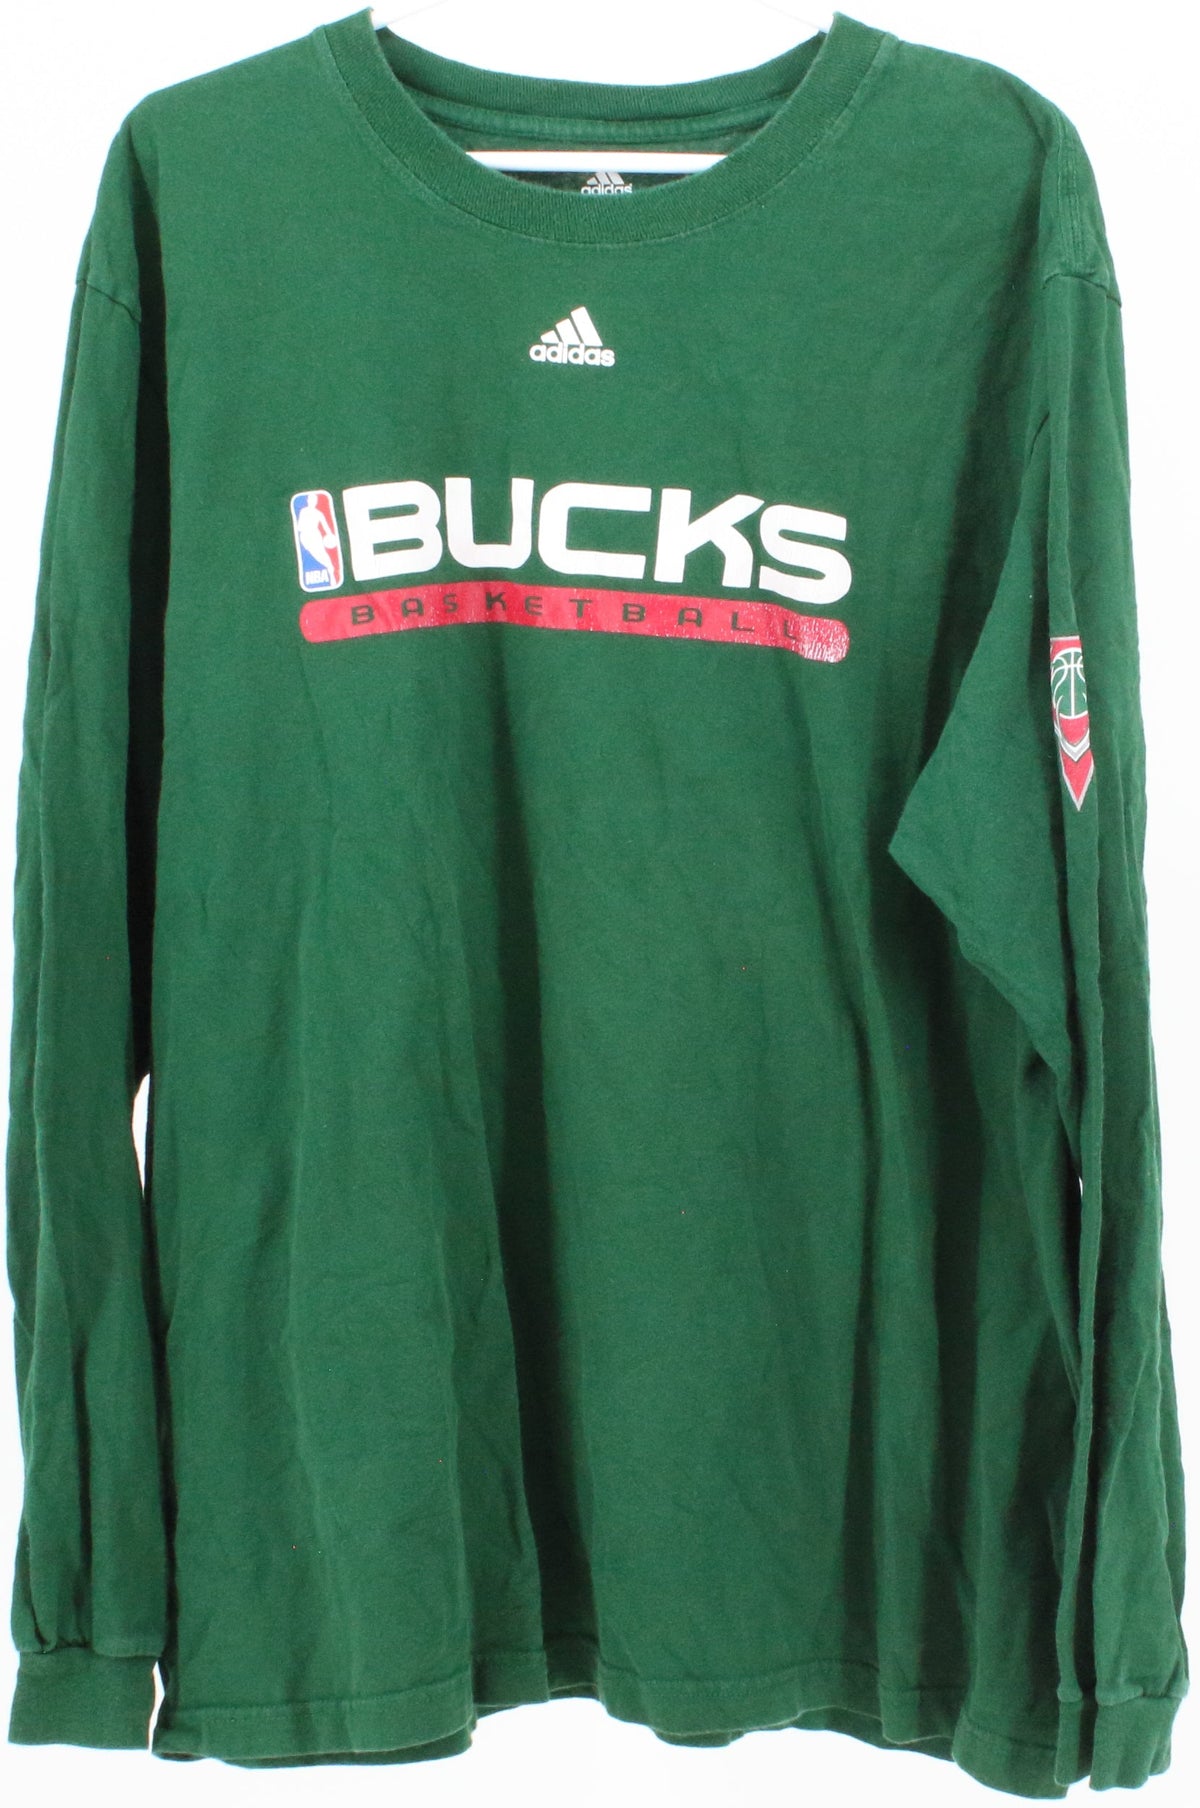 Adidas Bucks Basketball Green Long Sleeve T-Shirt